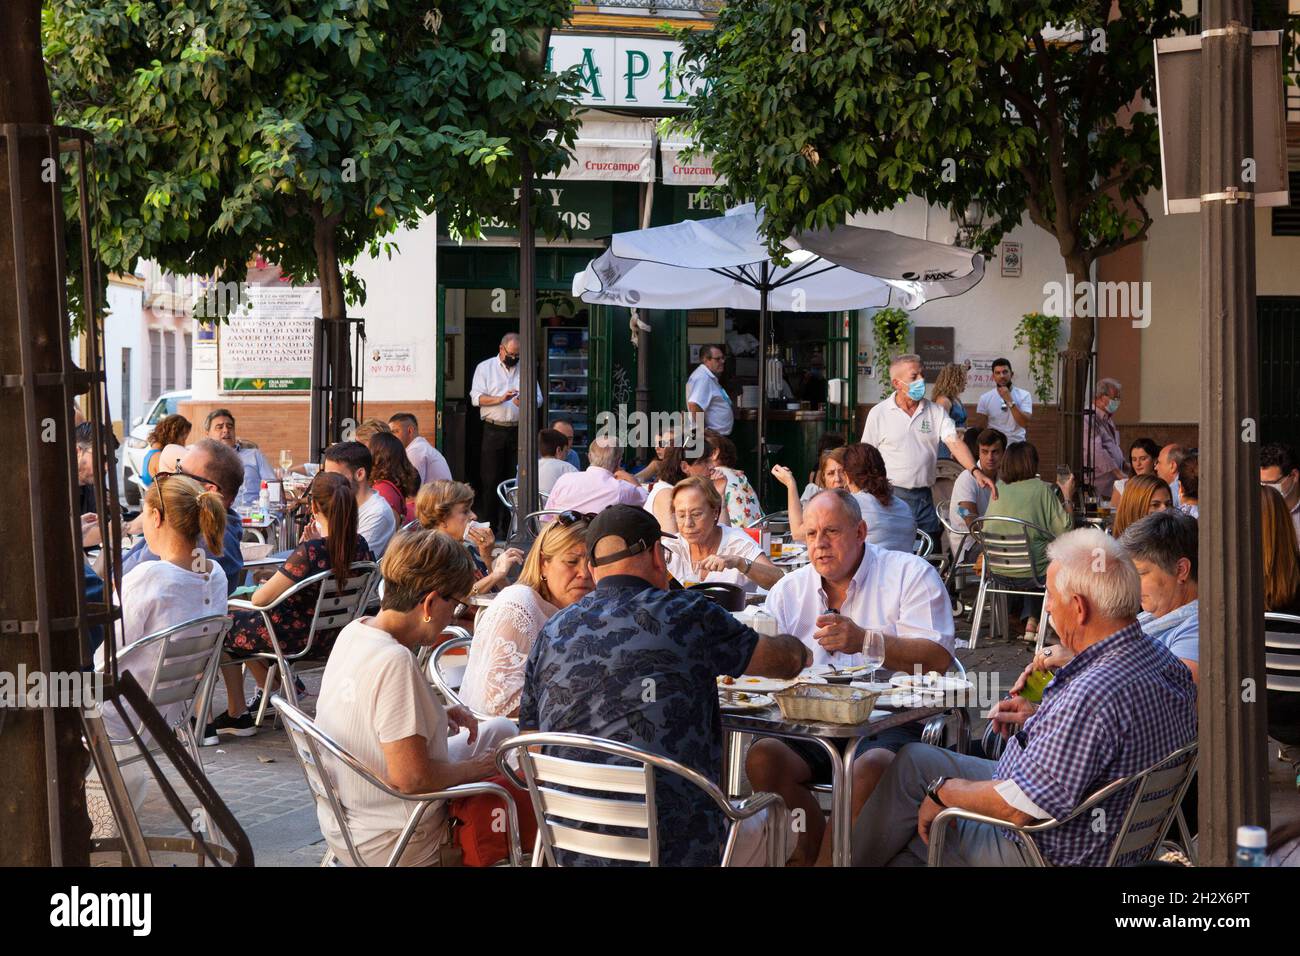 Taberna la Plazuela tapas bar & restaurant in the Triana district of Seville Stock Photo